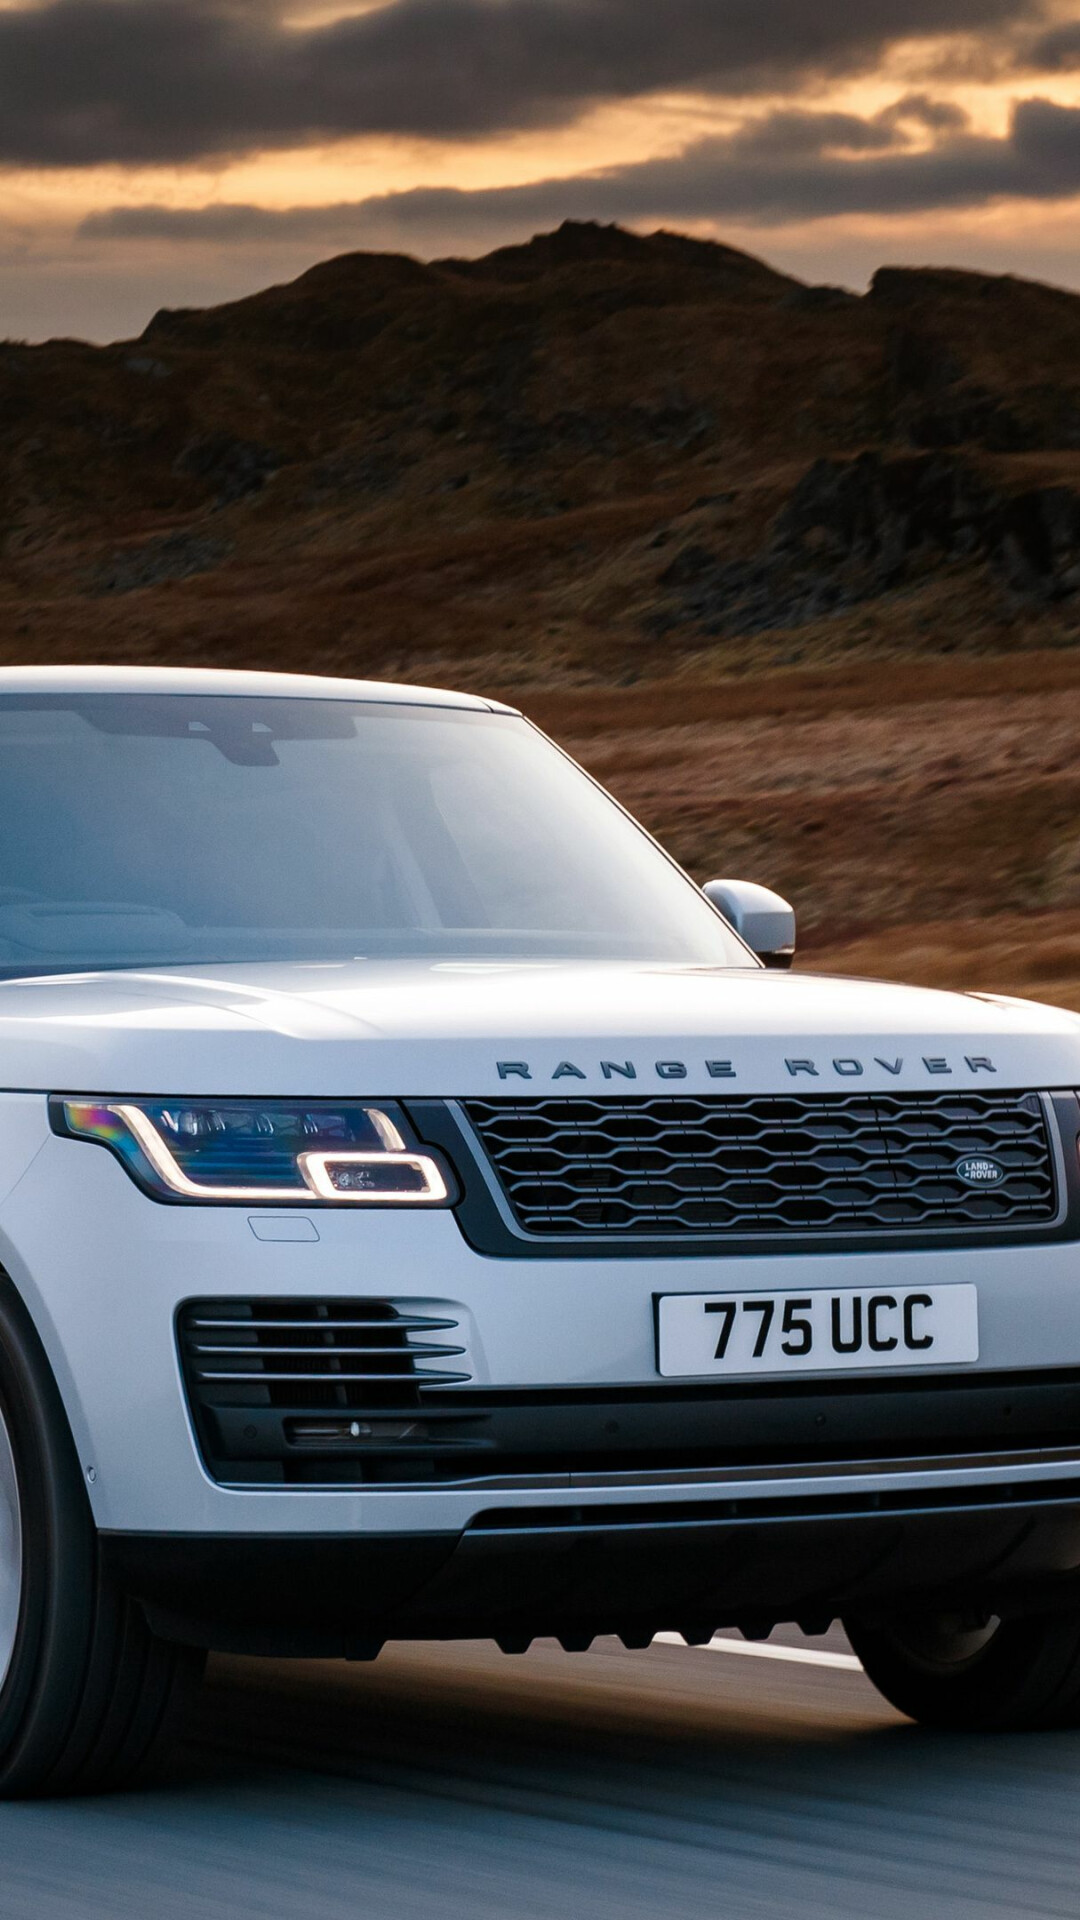 Range Rover: JLR sub-brand, now in its fifth generation. 1080x1920 Full HD Wallpaper.